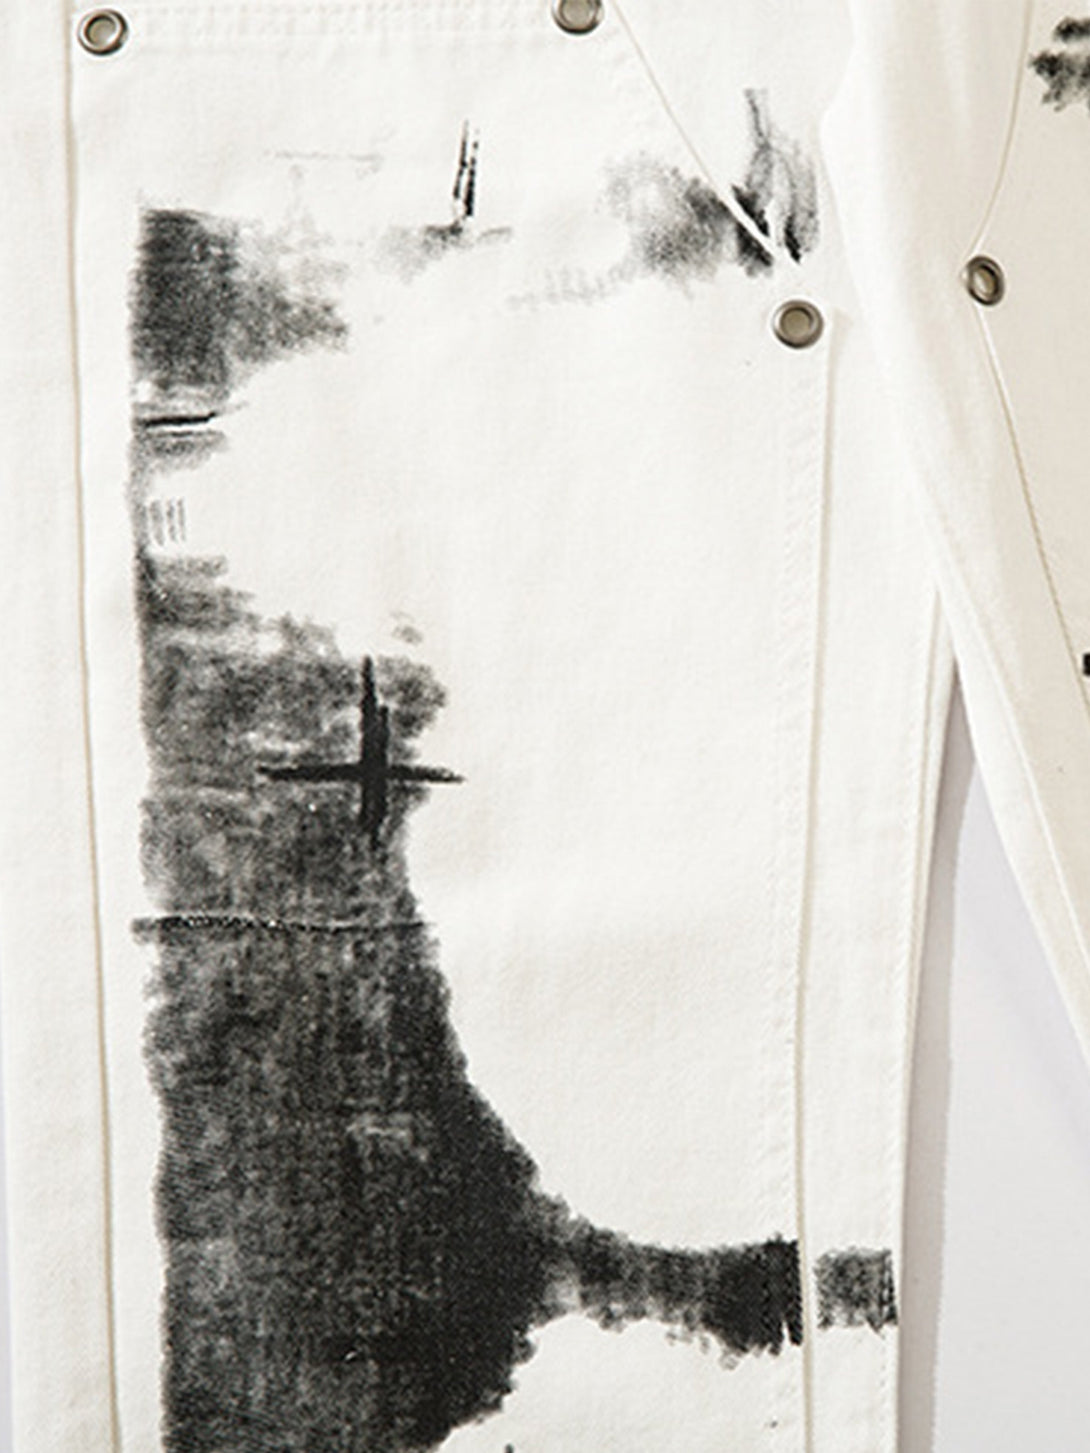 Majesda® - Graffiti Print White Straight Jeans -1184- Outfit Ideas - Streetwear Fashion - majesda.com